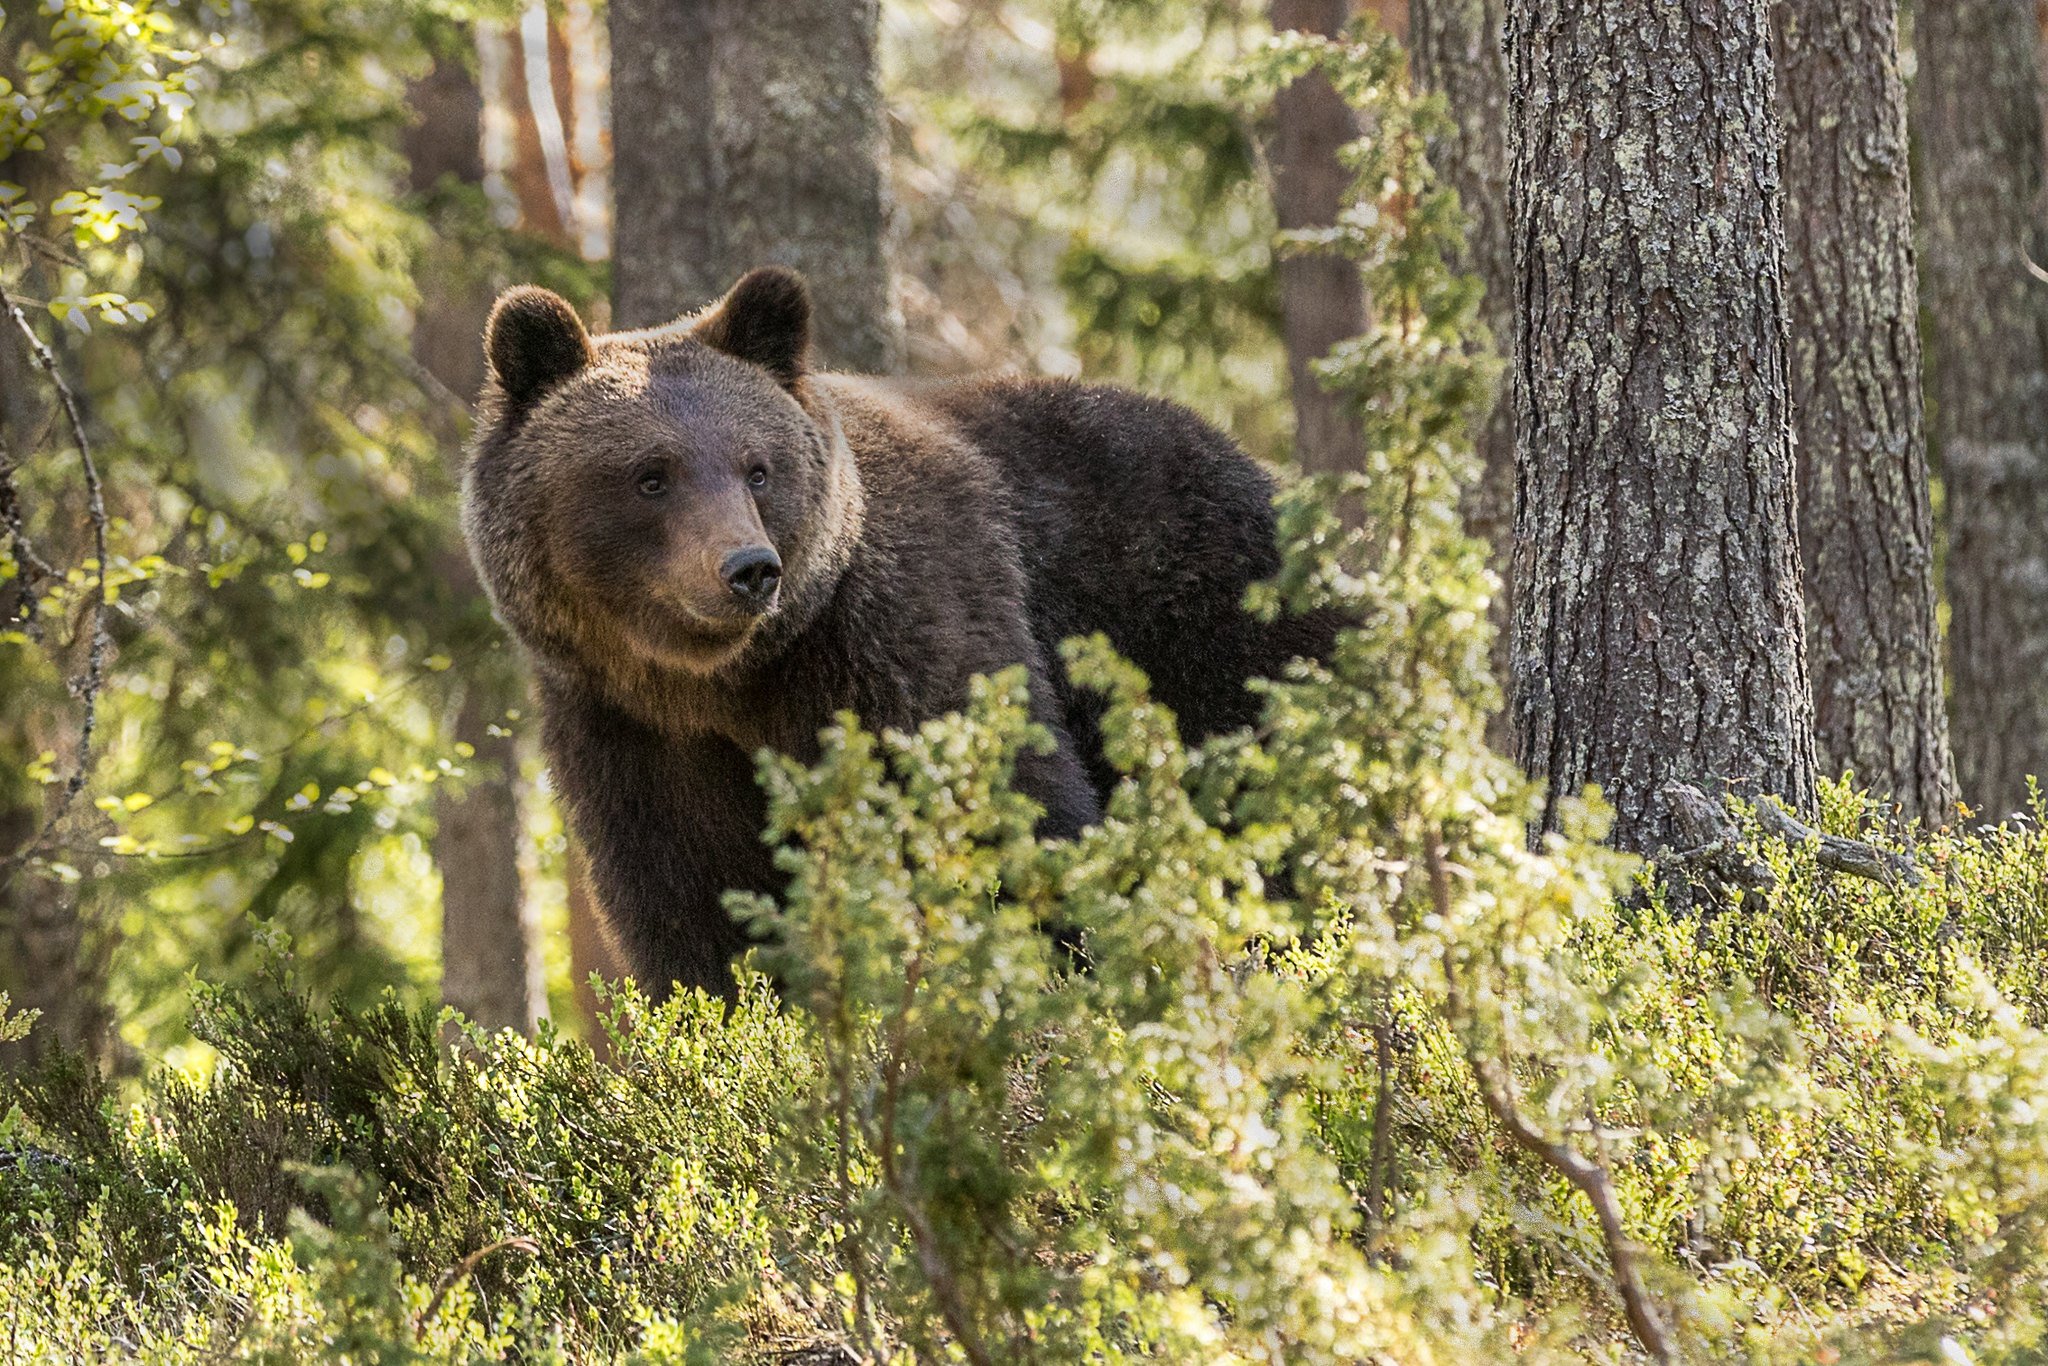 Собака вывела из леса медведей. Медведь картинка. Медведь за кустом. Медведь идет. Медведь на дереве.